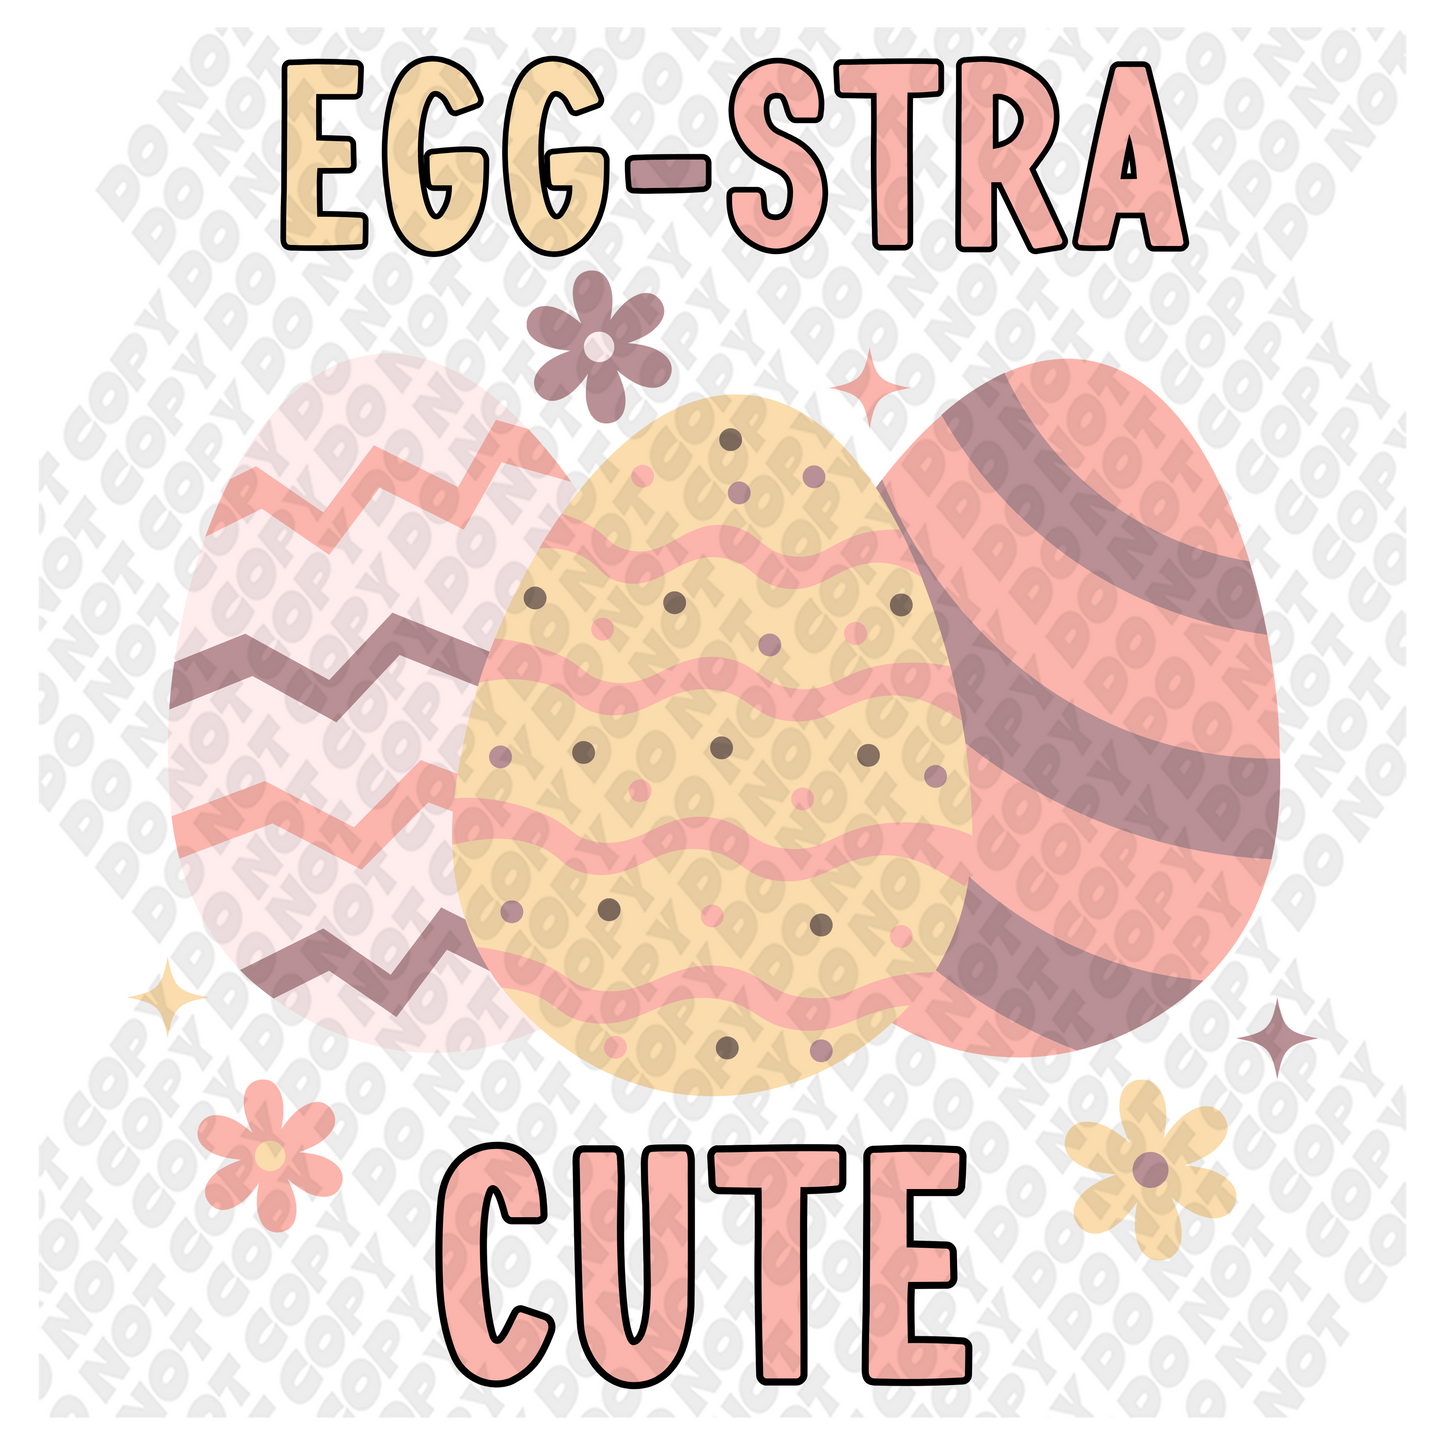 Eggstra Cute